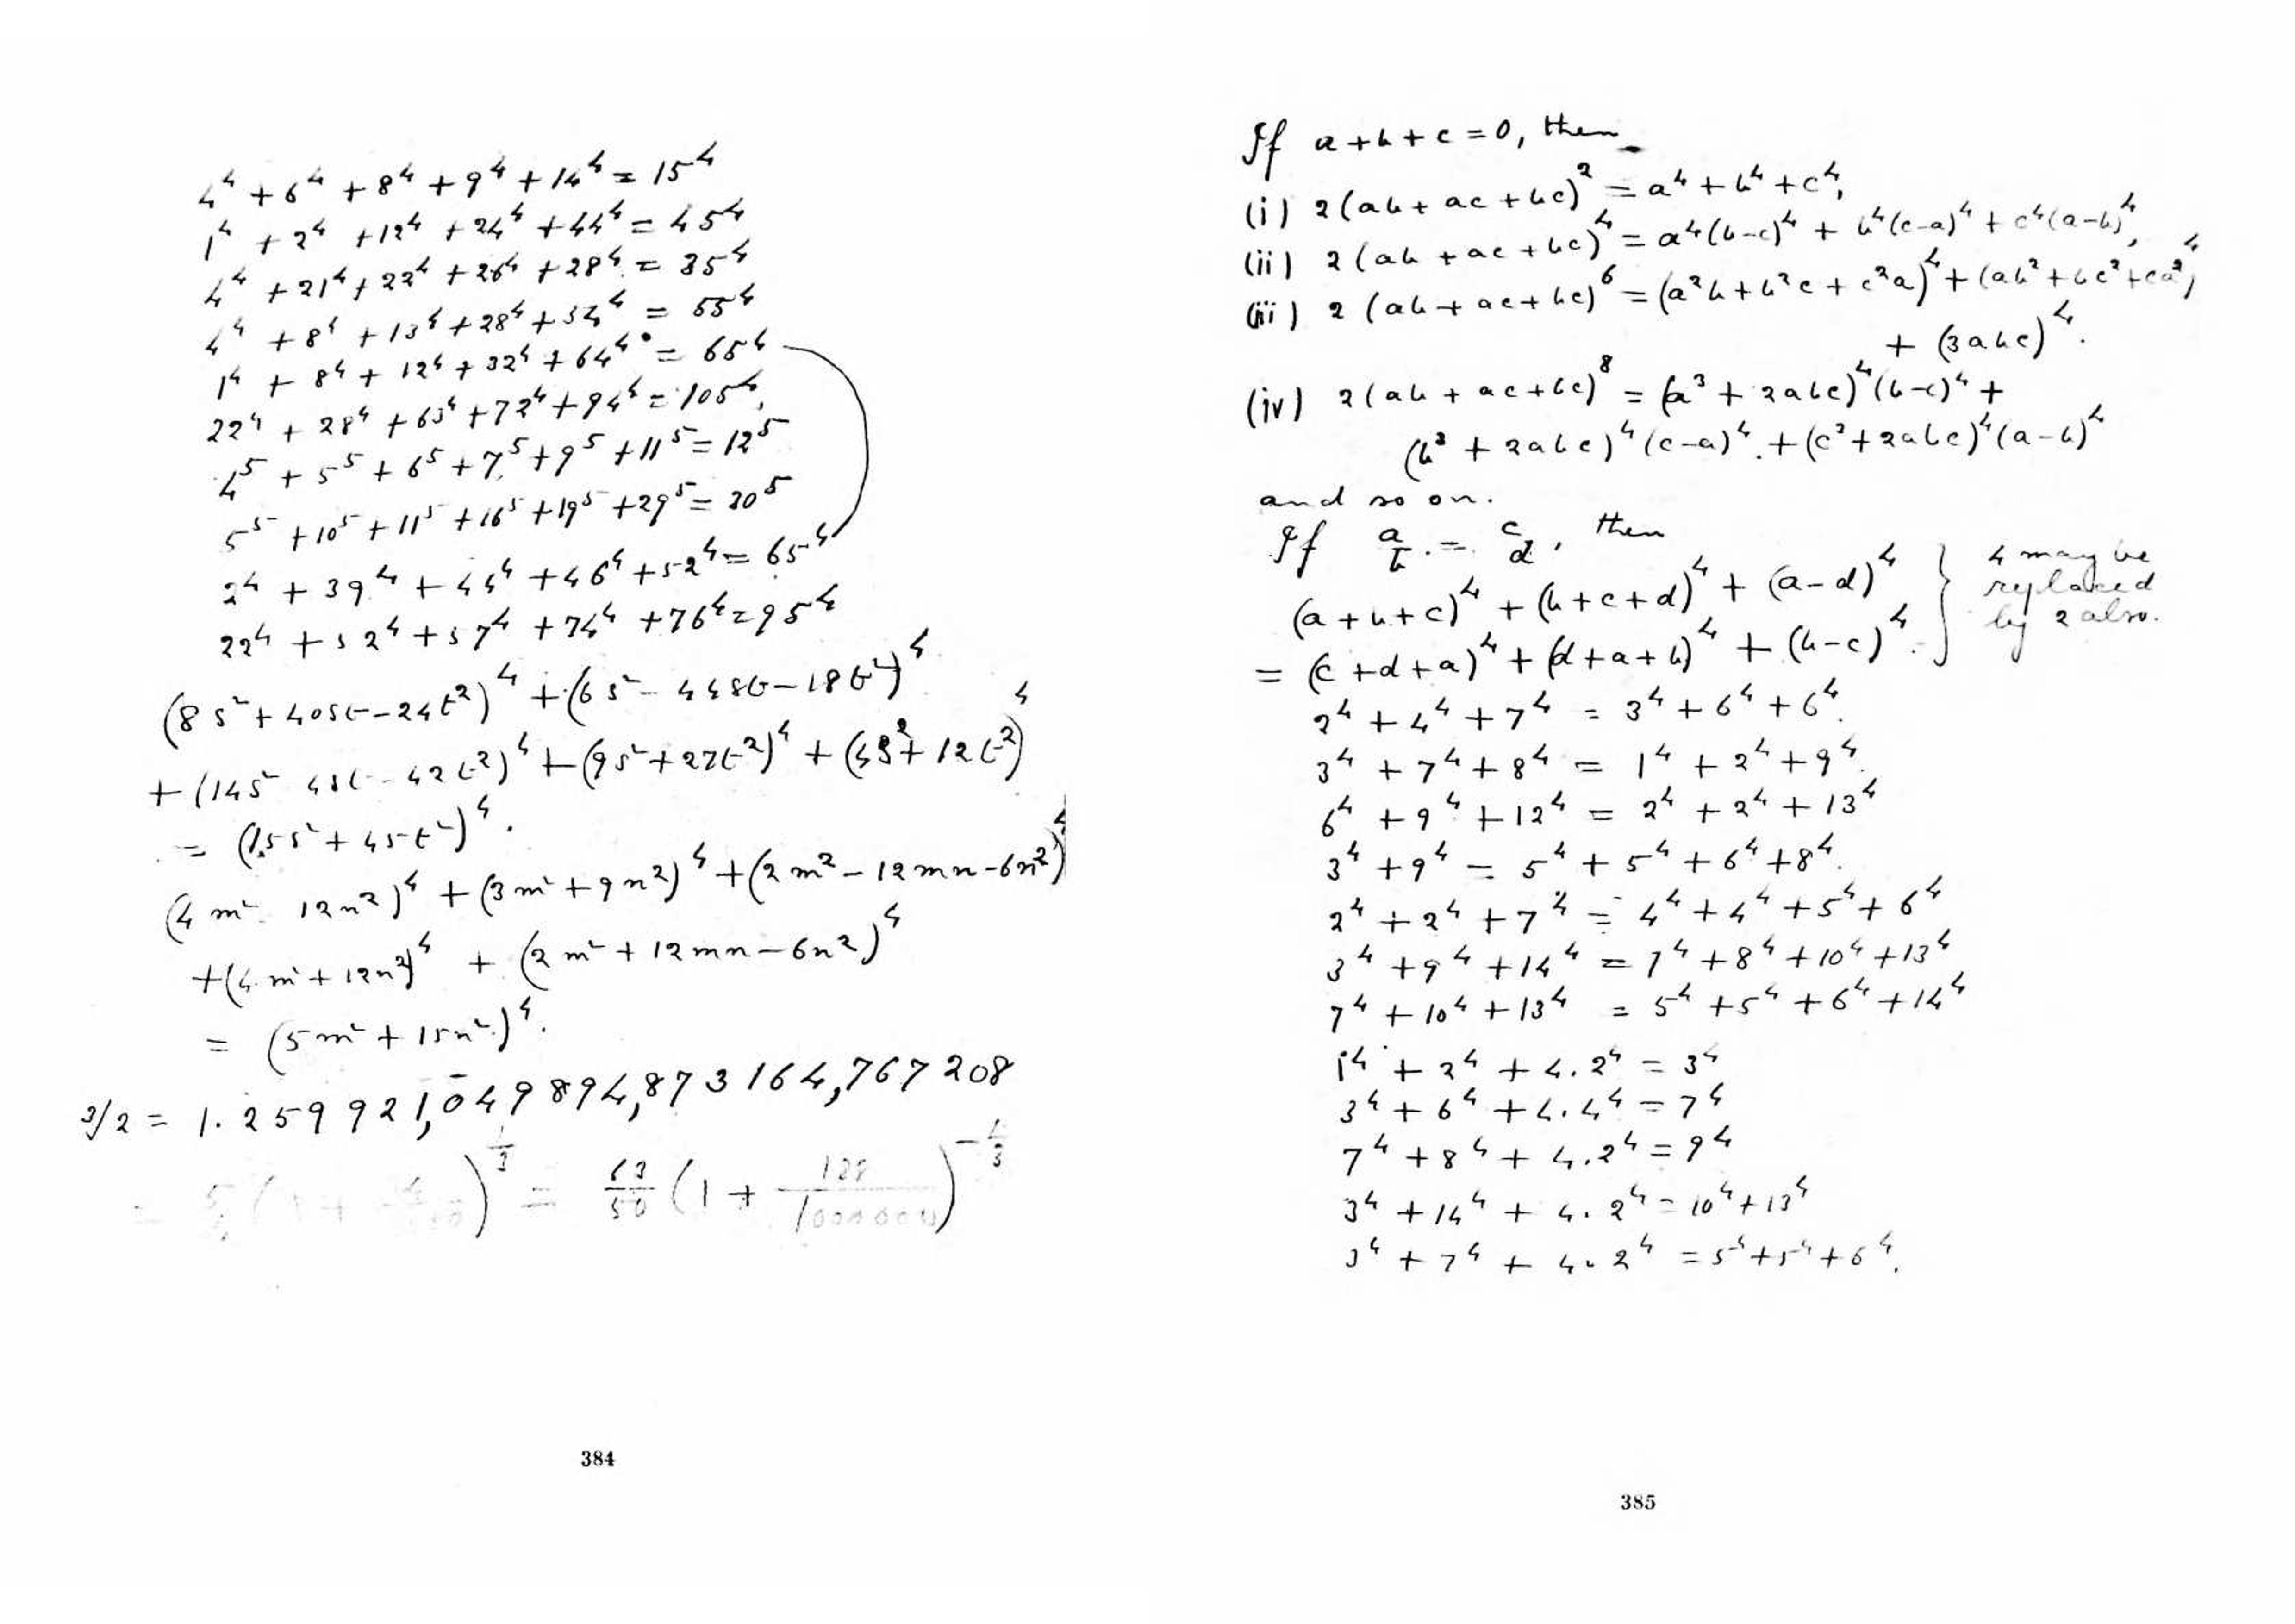 Notebook 3より
左のページついては[前に書いた記事](https://mathlog.info/articles/WpyJcz7DjhhvWArh214T)の最後にてちょっとした解説を載せている。